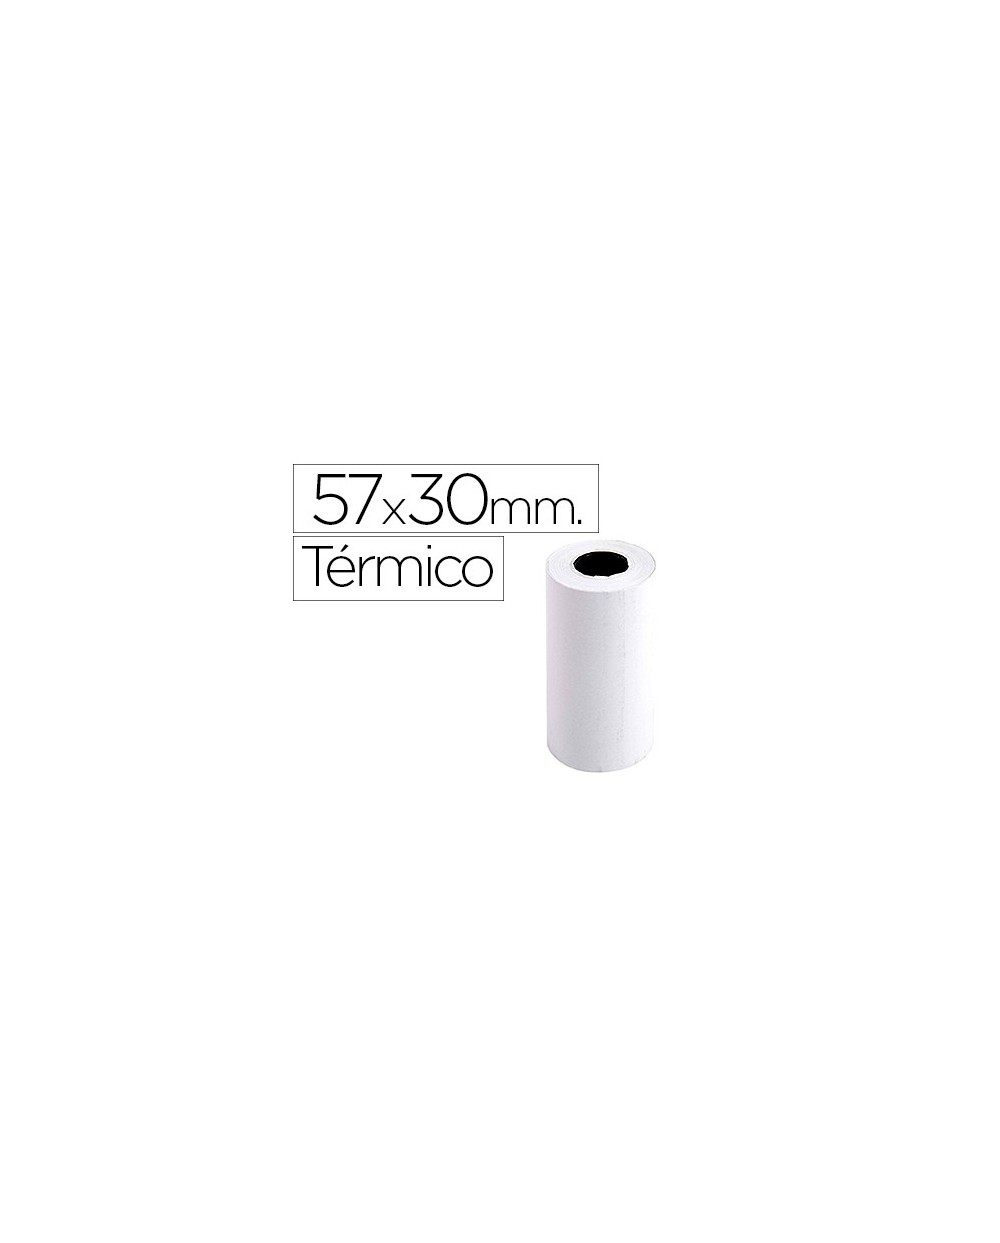 Rollo sumadora exacompta termico 57 mm x 30 mm 55 g m2 sin bisfenol a